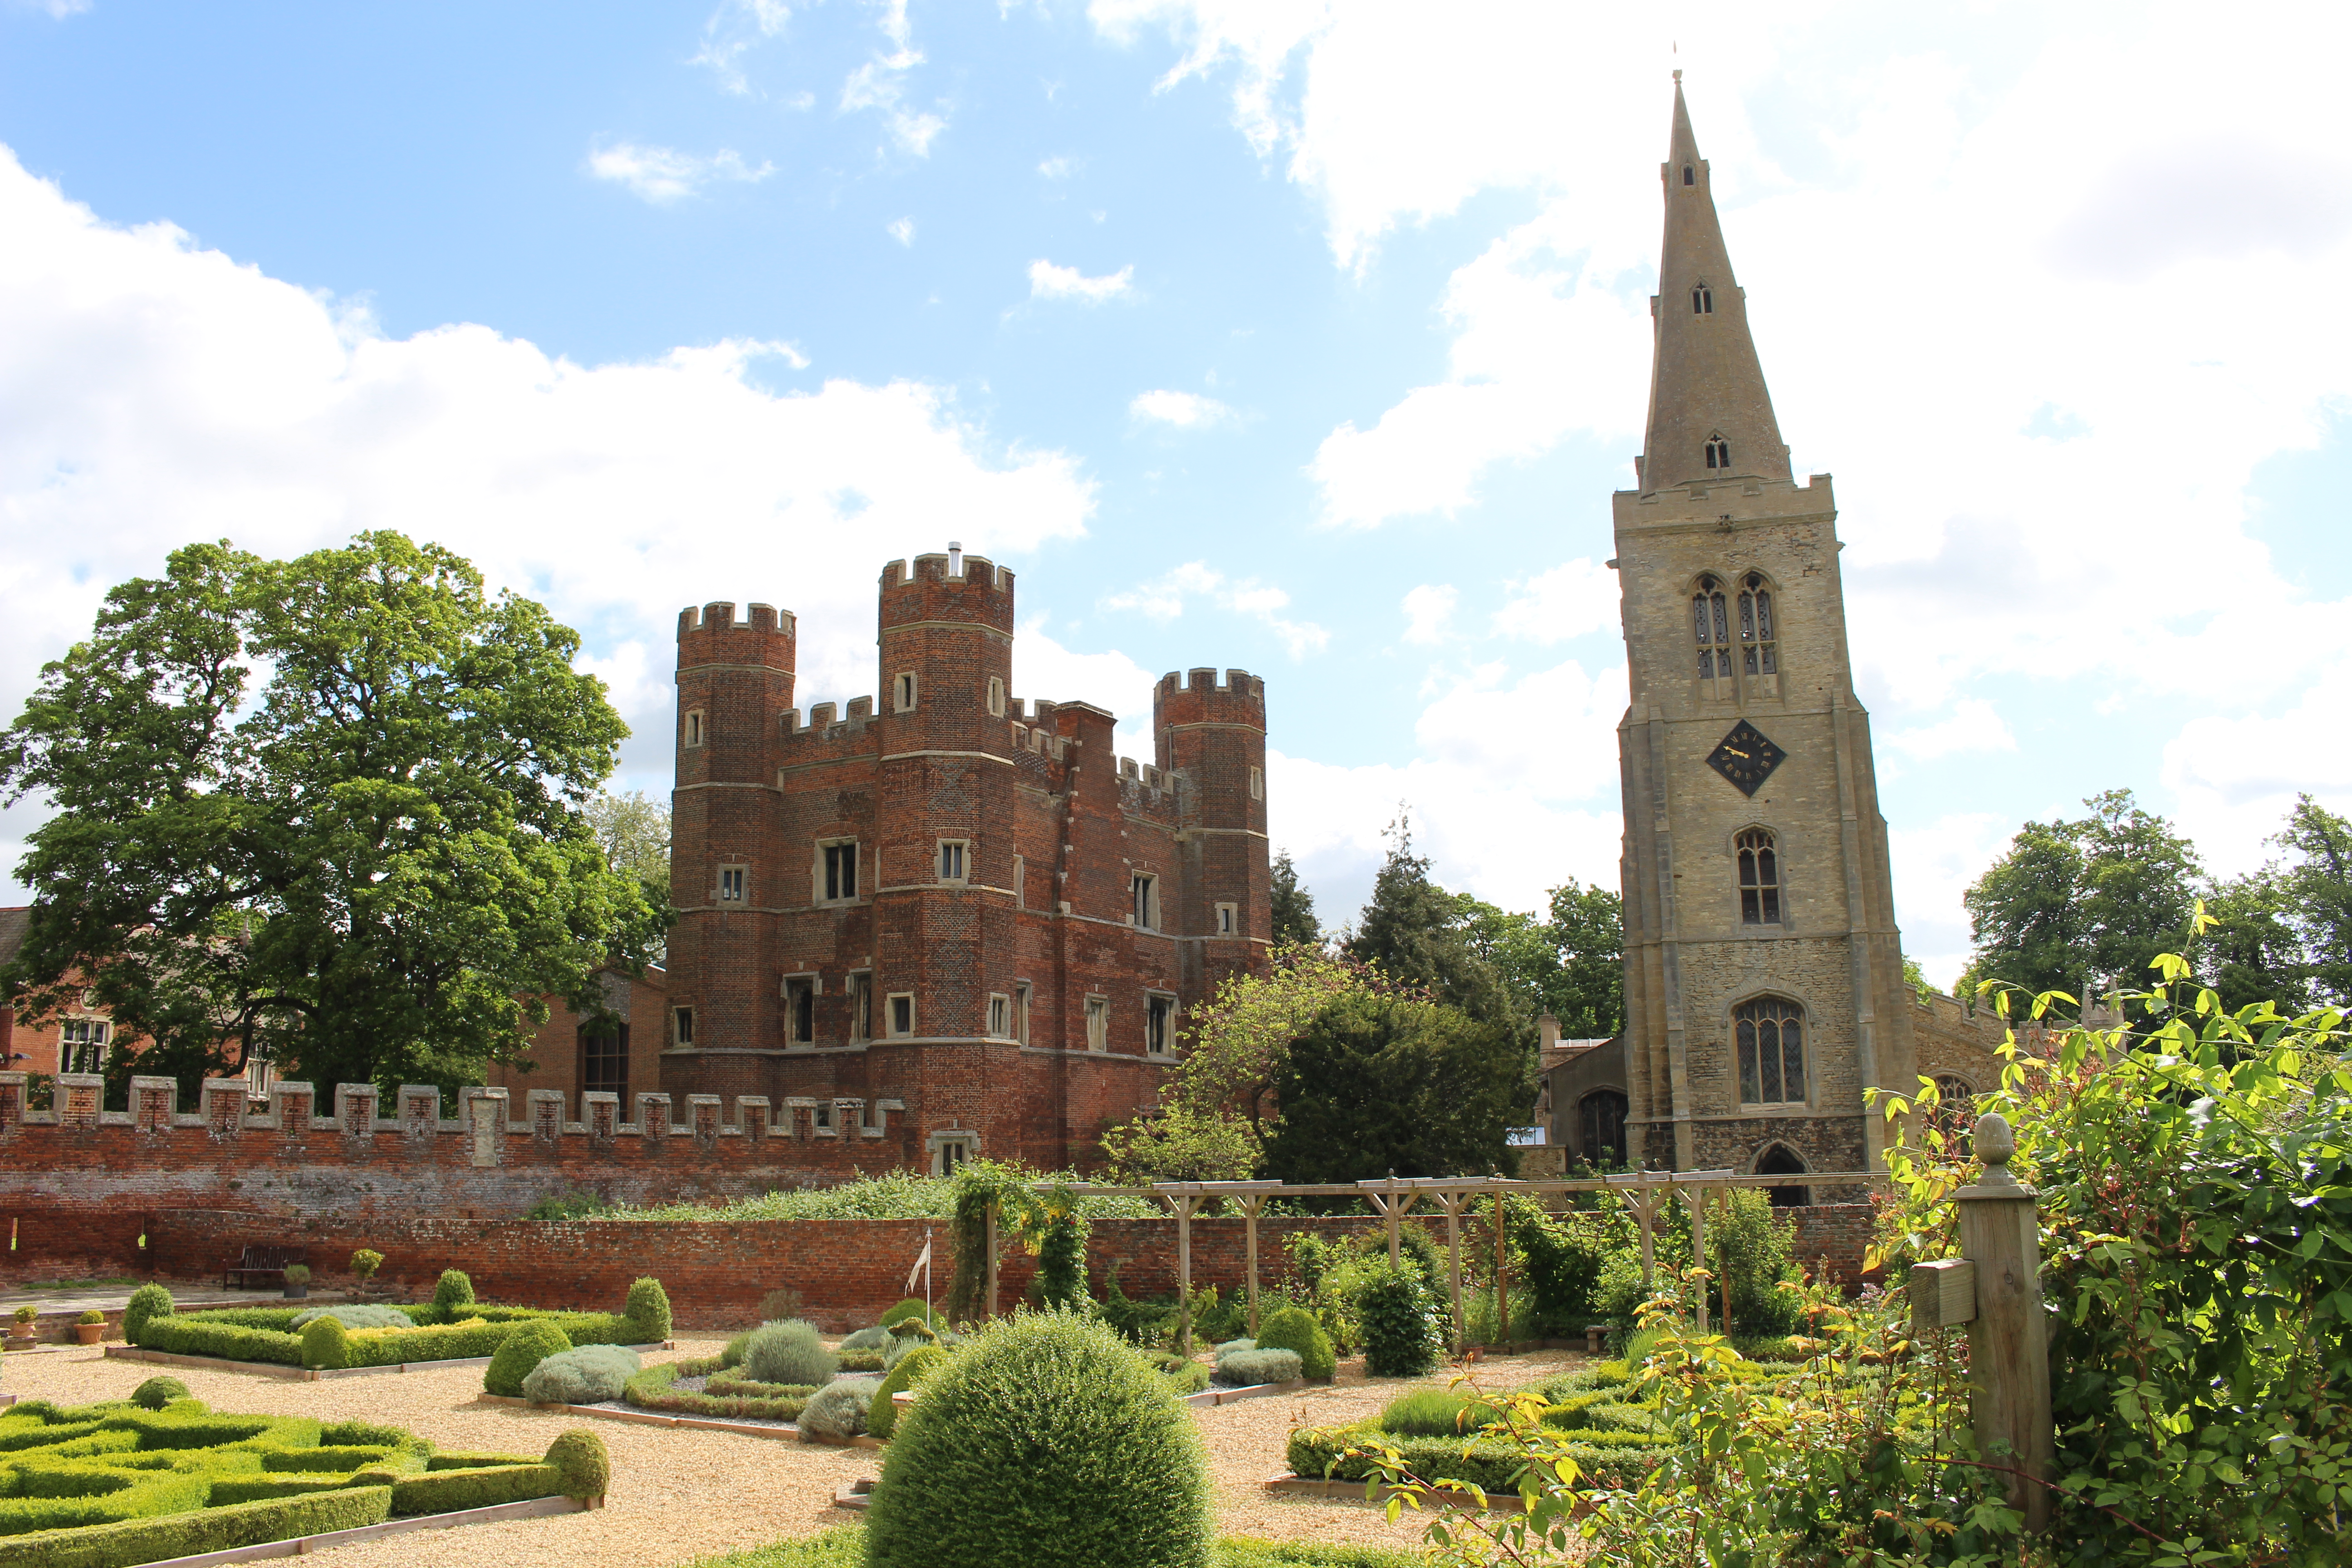 Buckden Palace from the modern-day garden